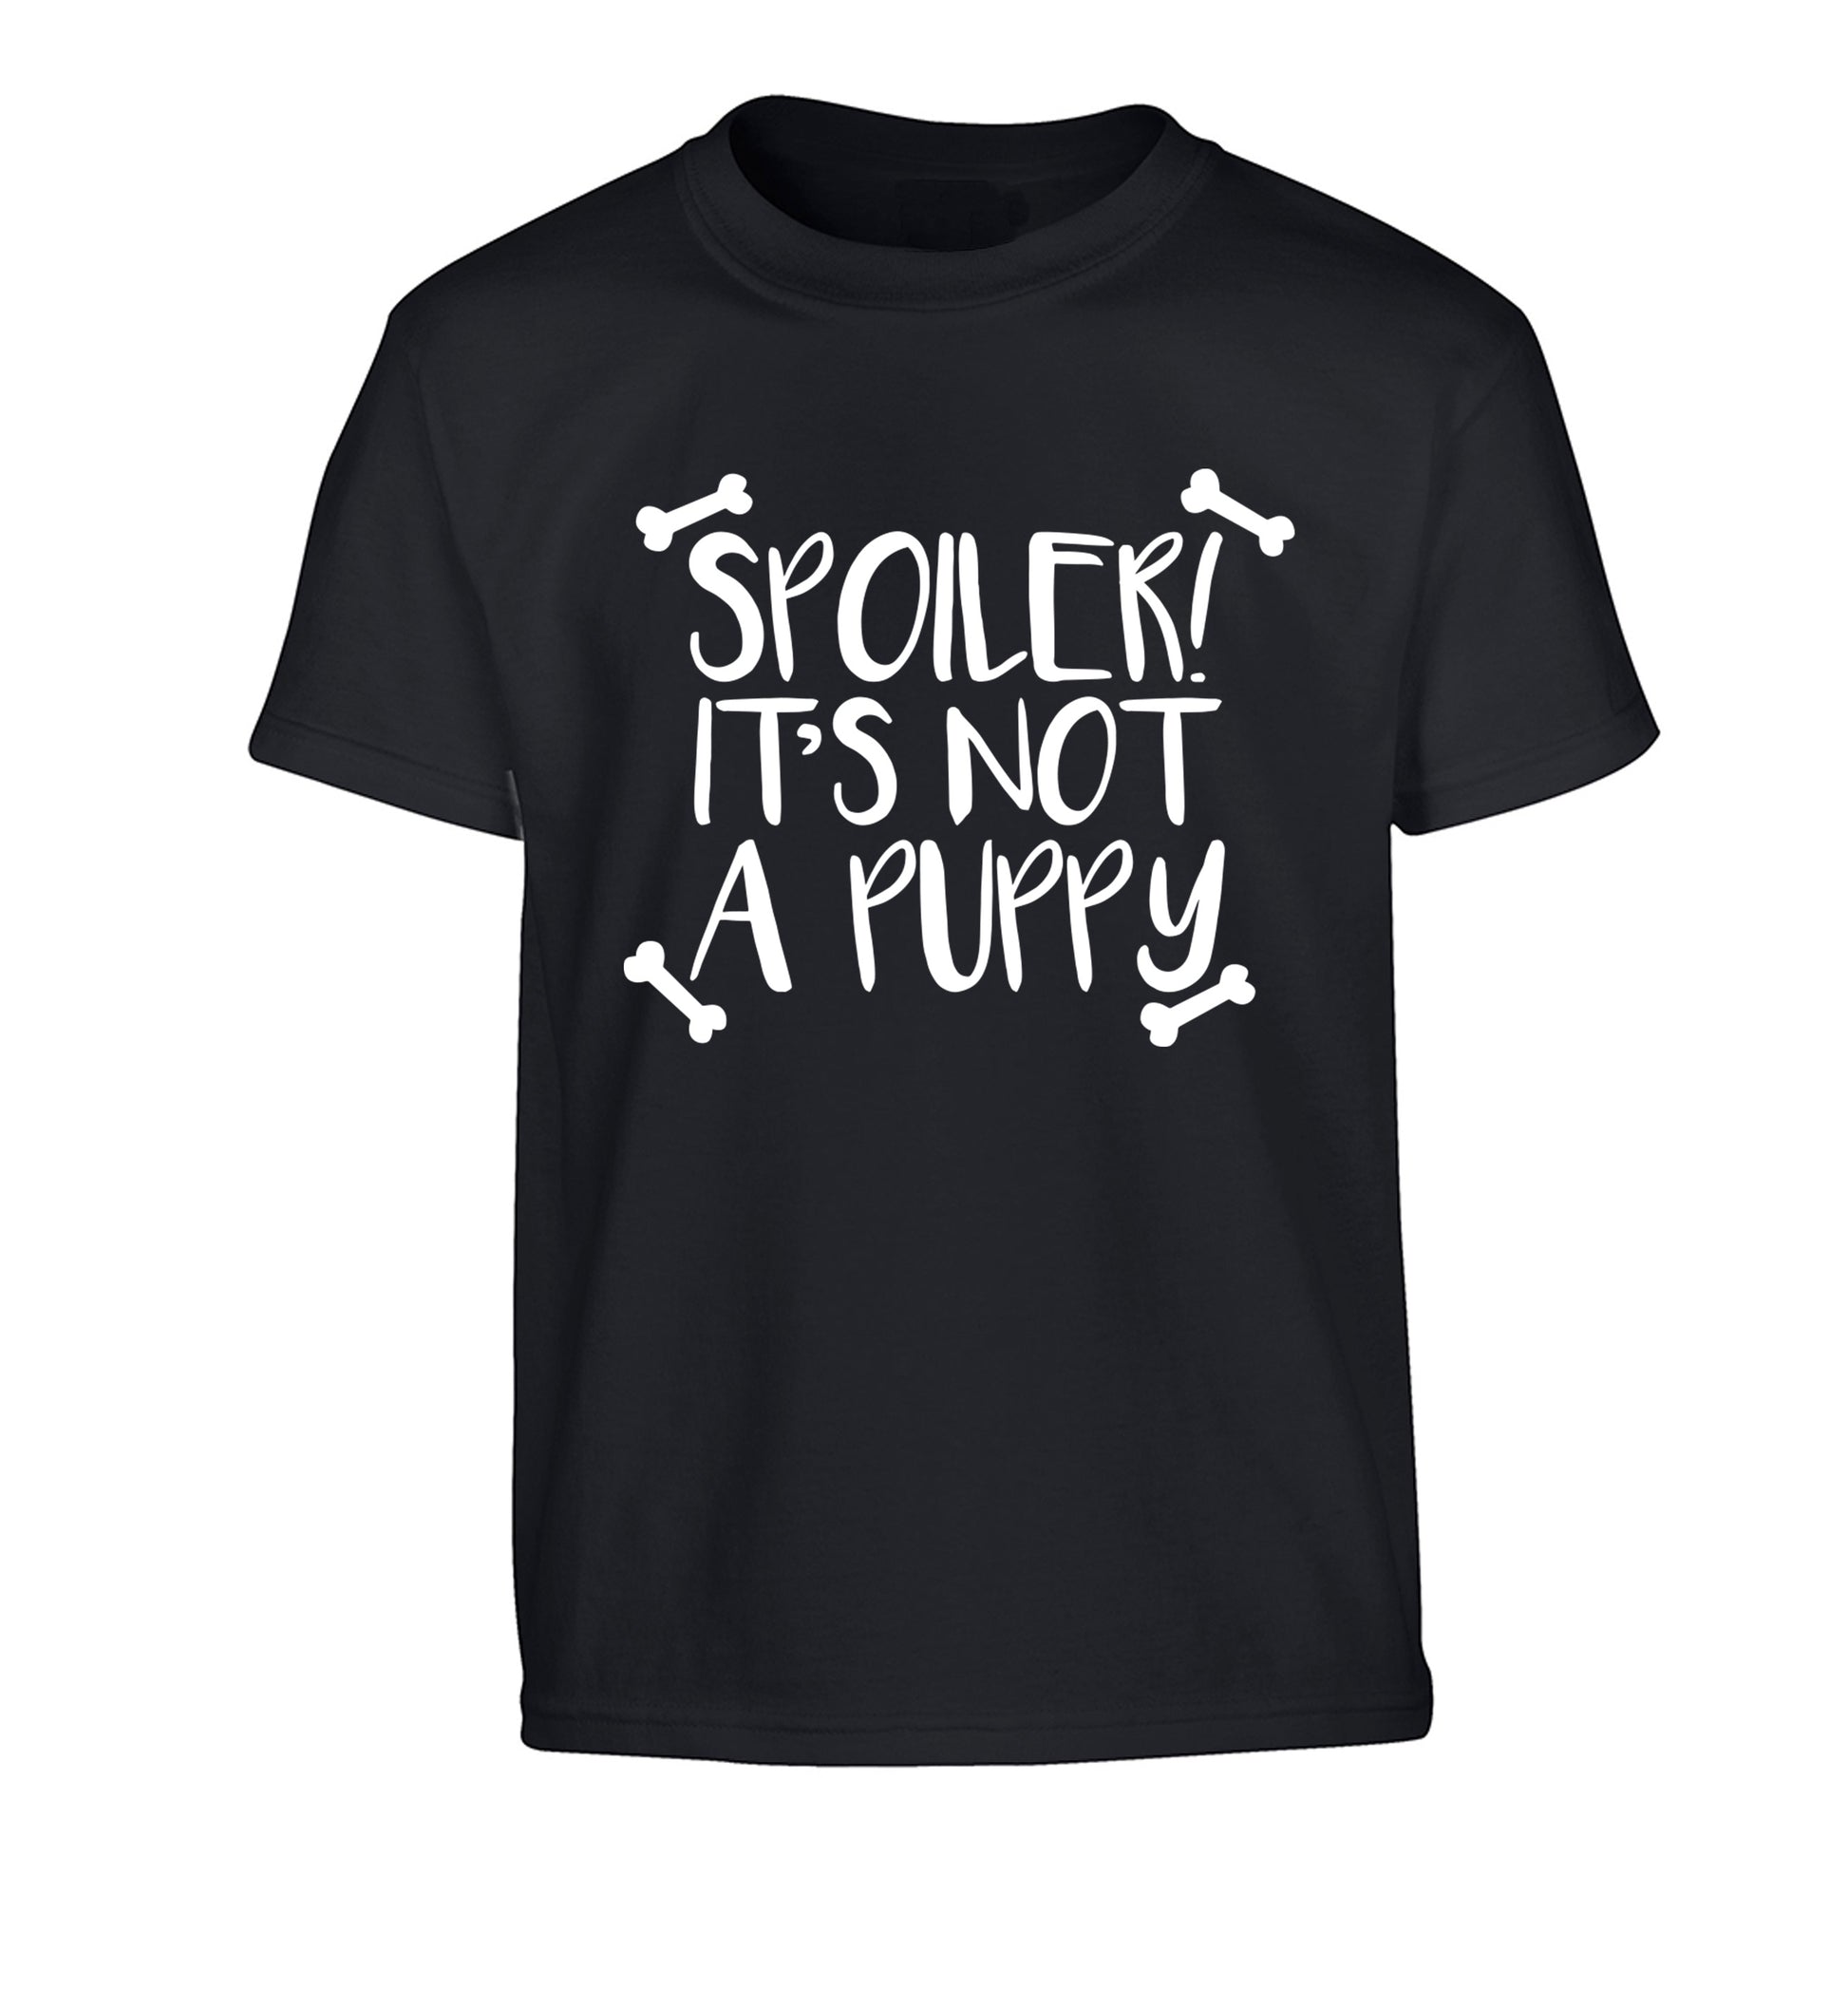 Spoiler it's not a puppy Children's black Tshirt 12-13 Years